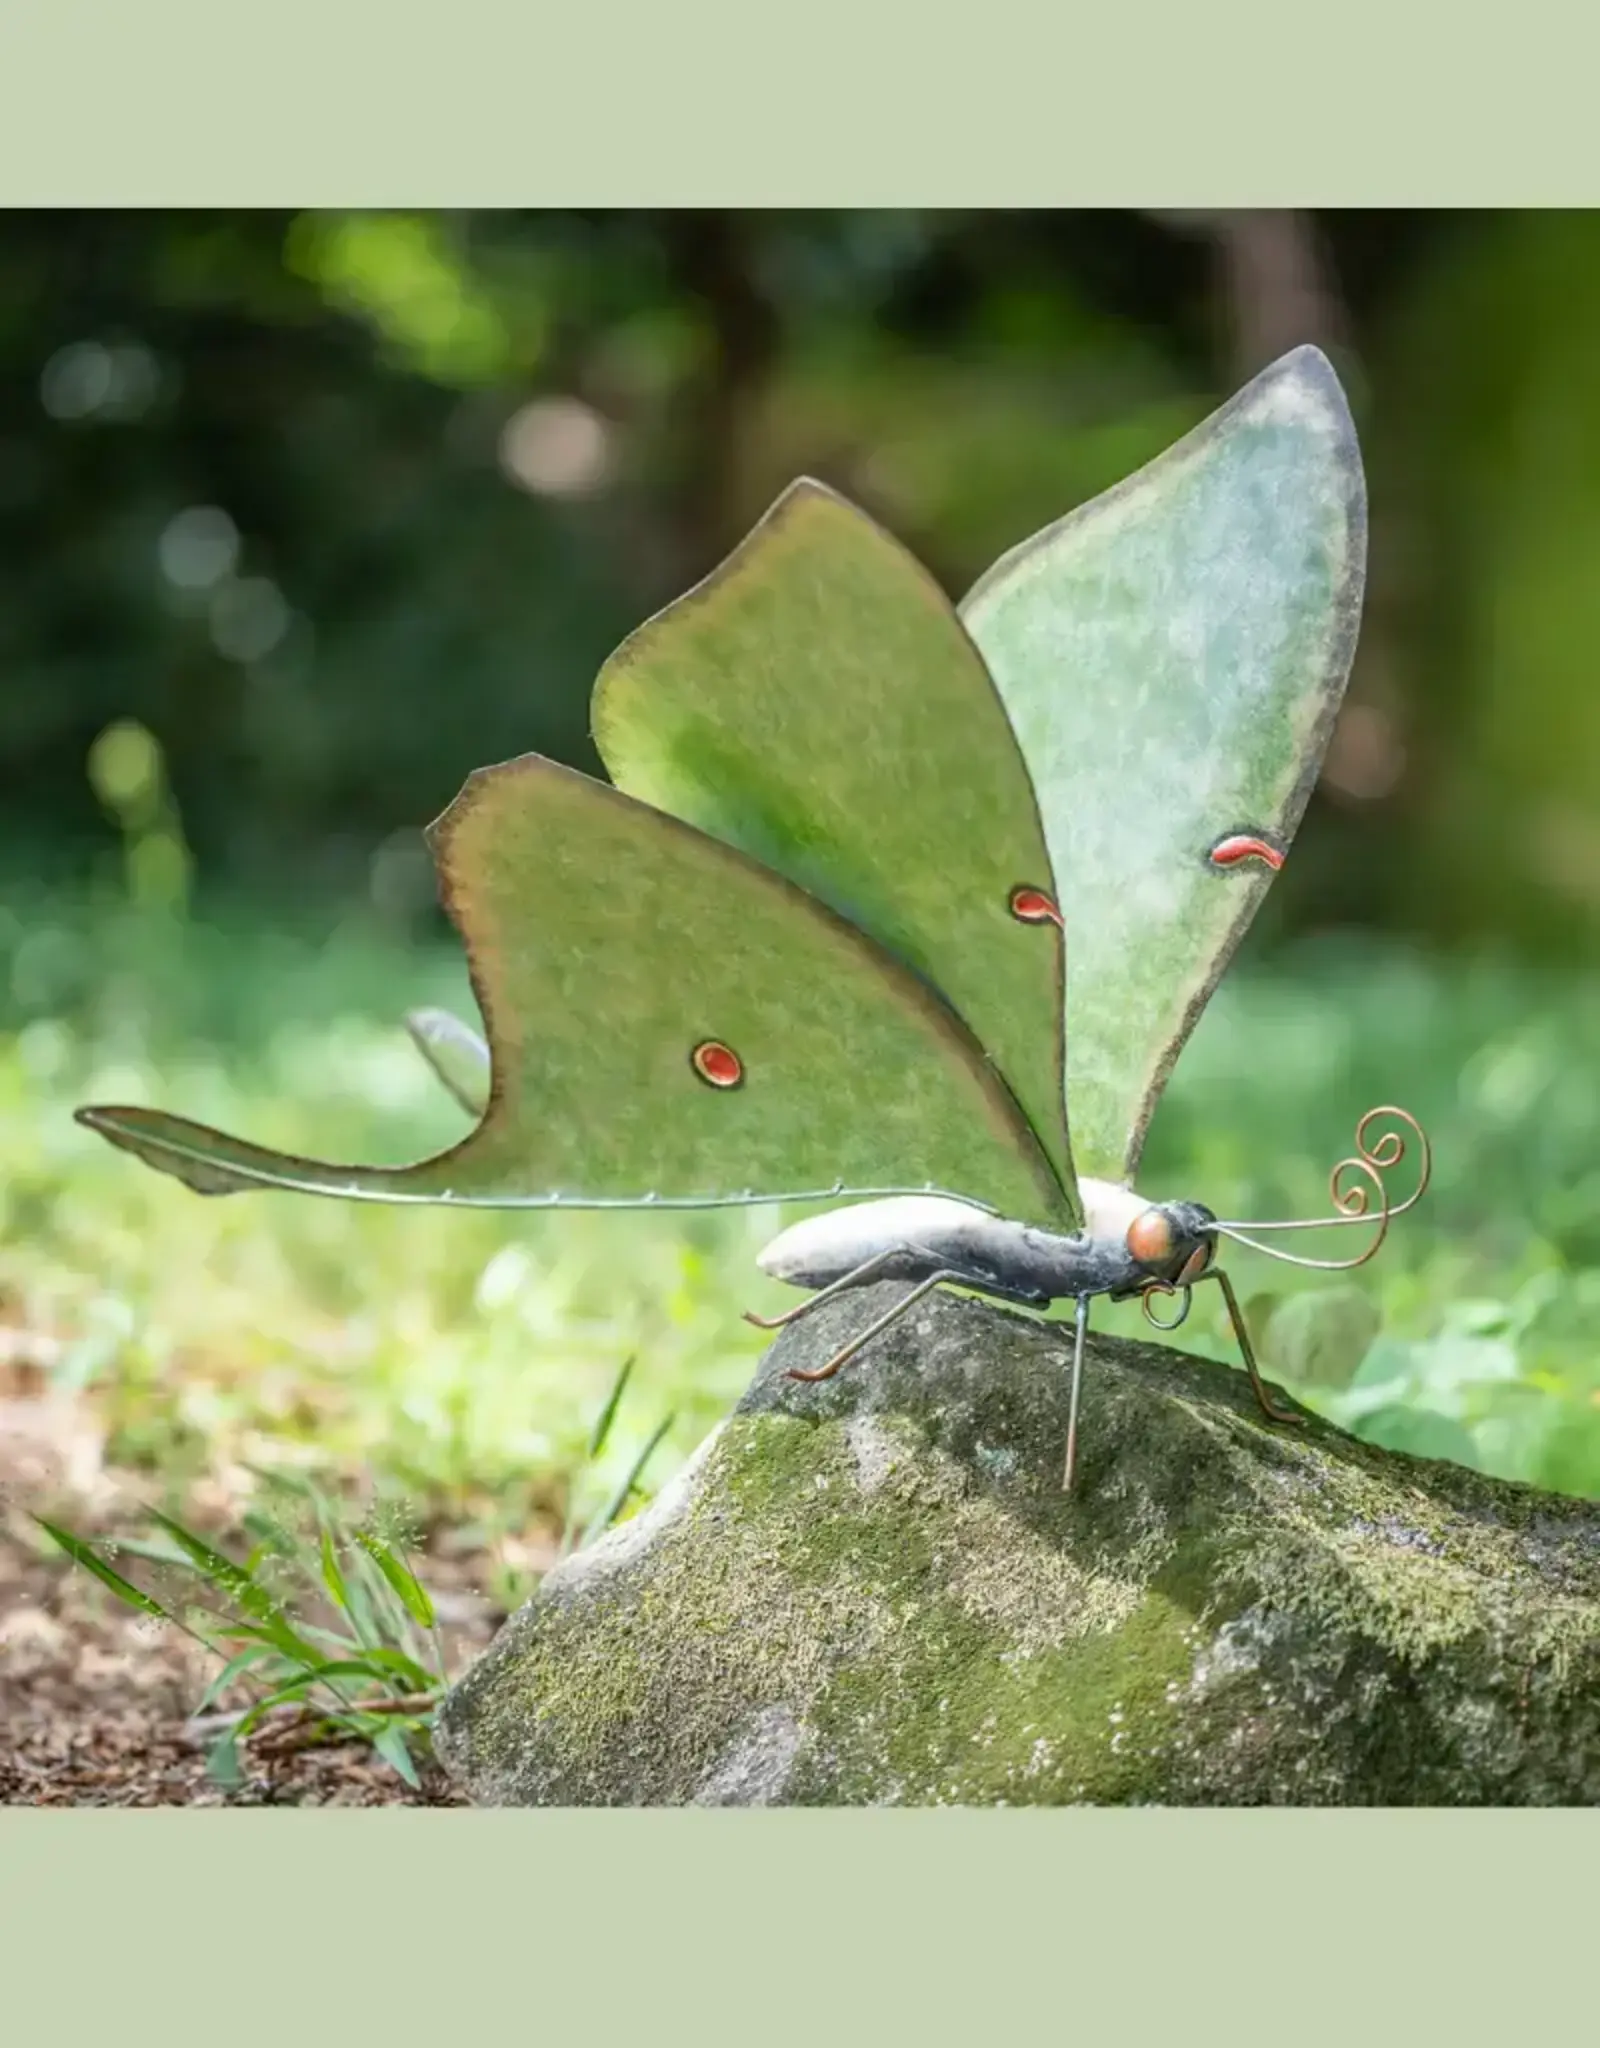 Evergreen Metal Luna Moth Statue